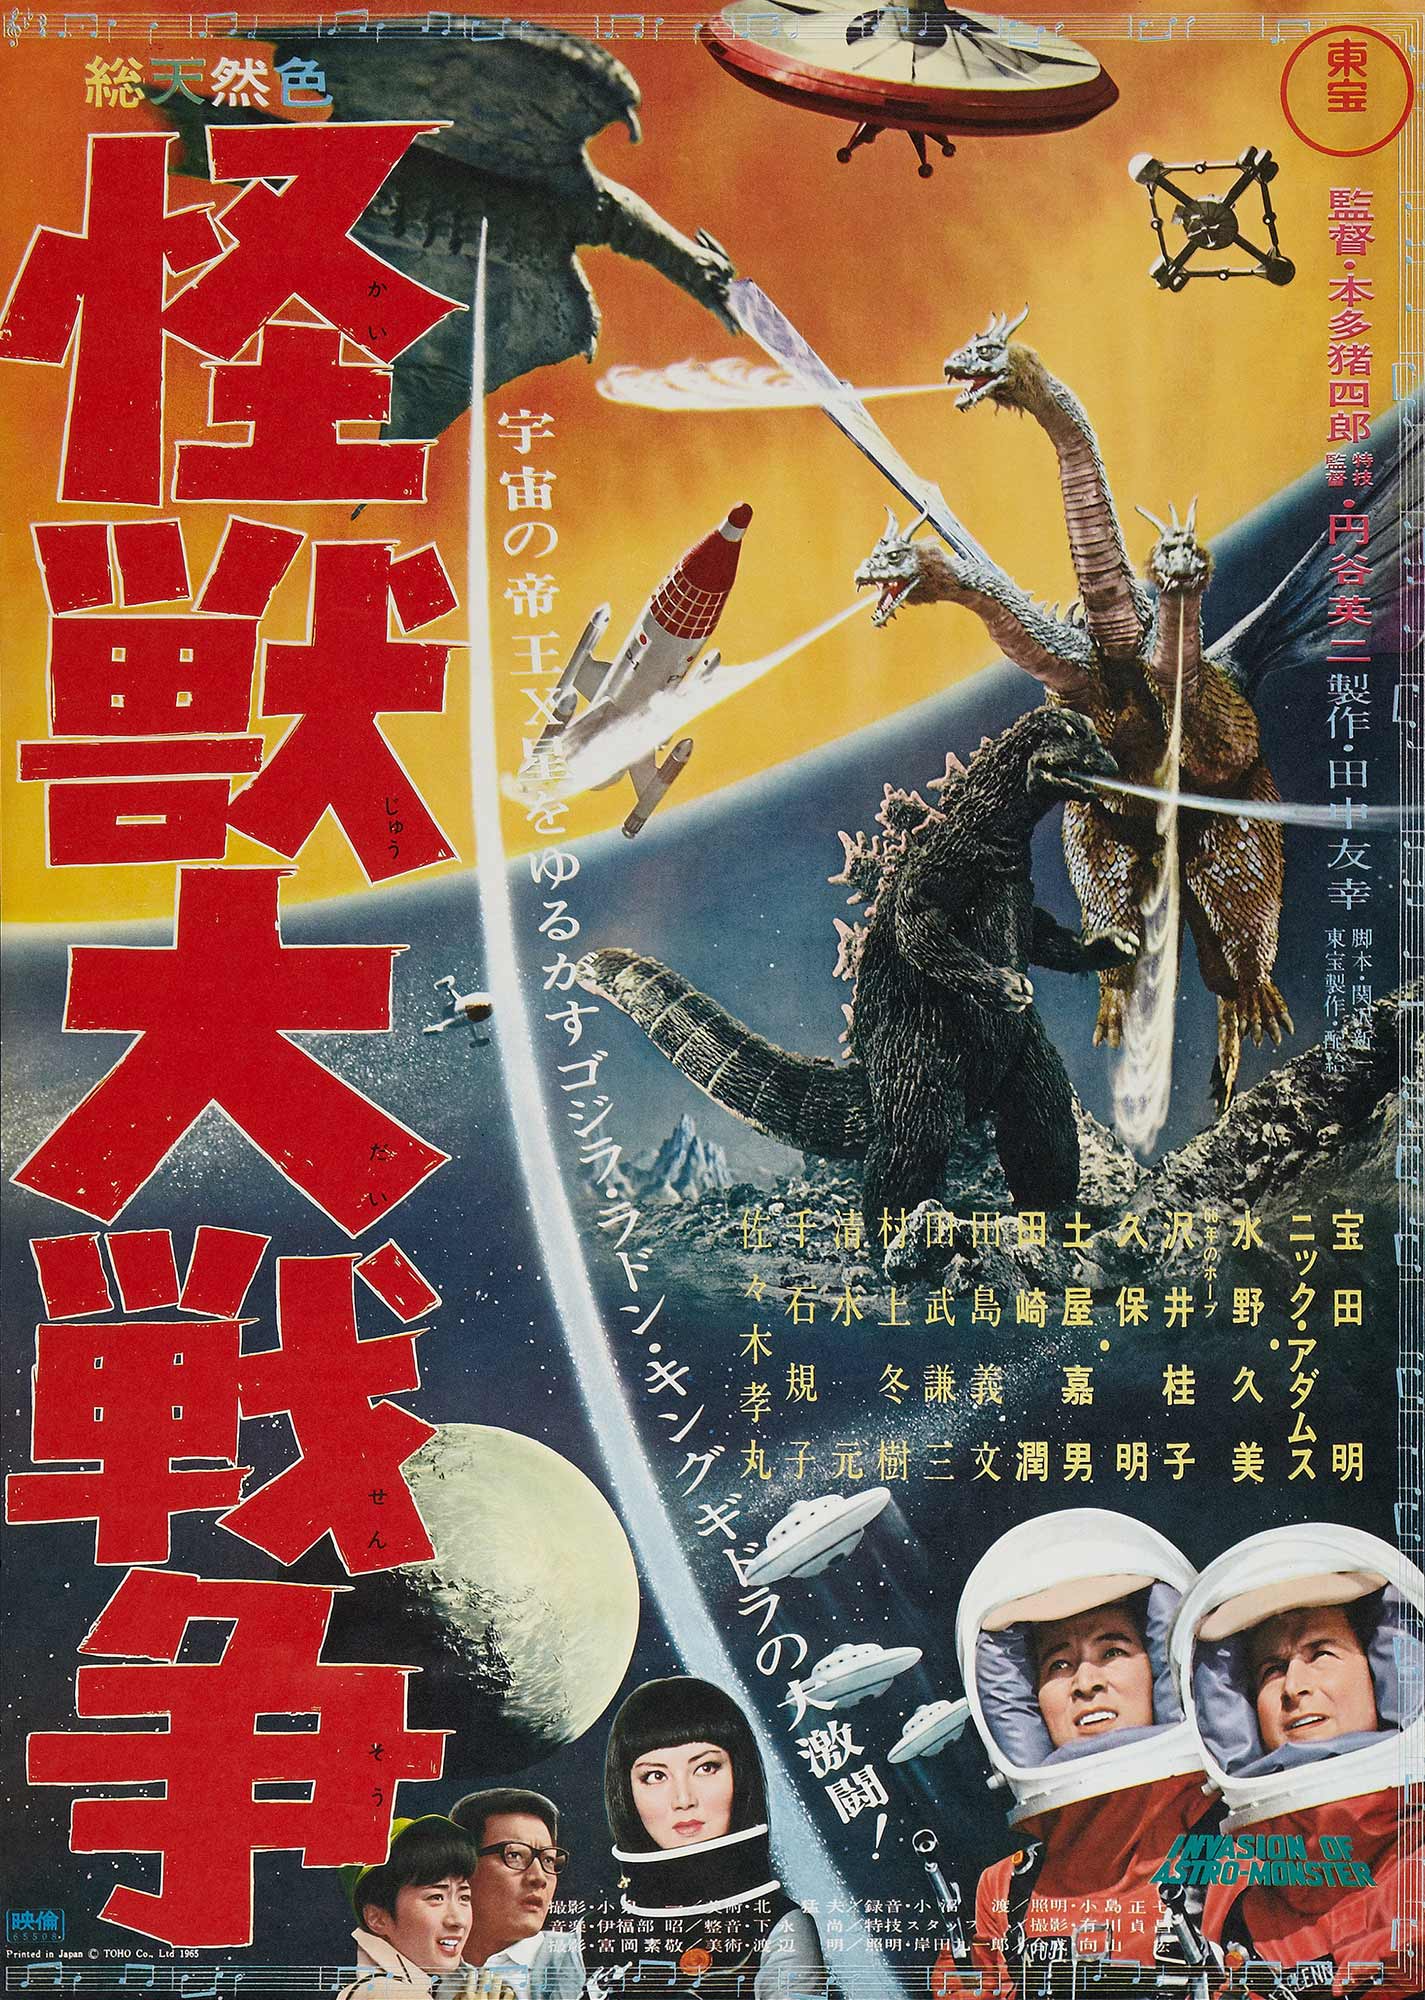 Invasion of Astro-Monster (1965) | Wikizilla, the kaiju encyclopedia